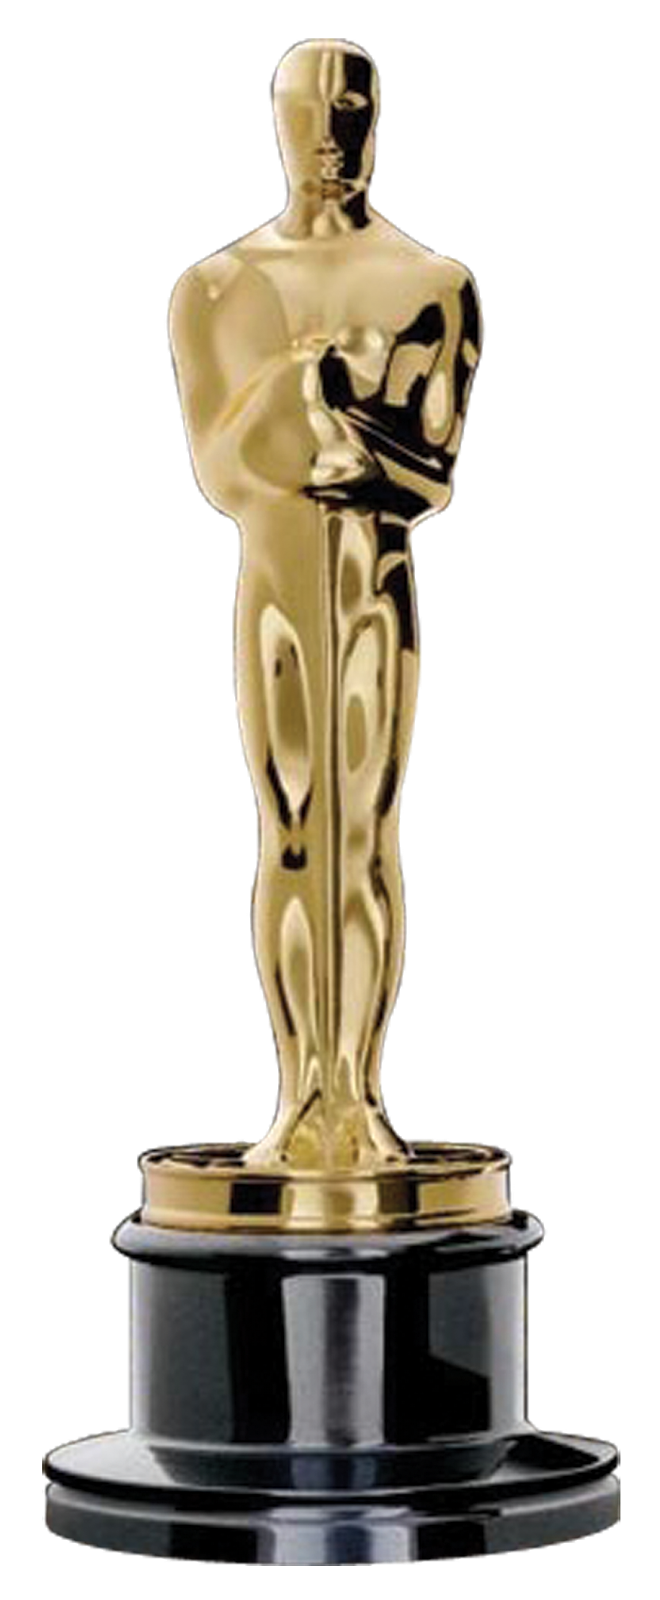 Oscar Academy Awards PNG Background Image